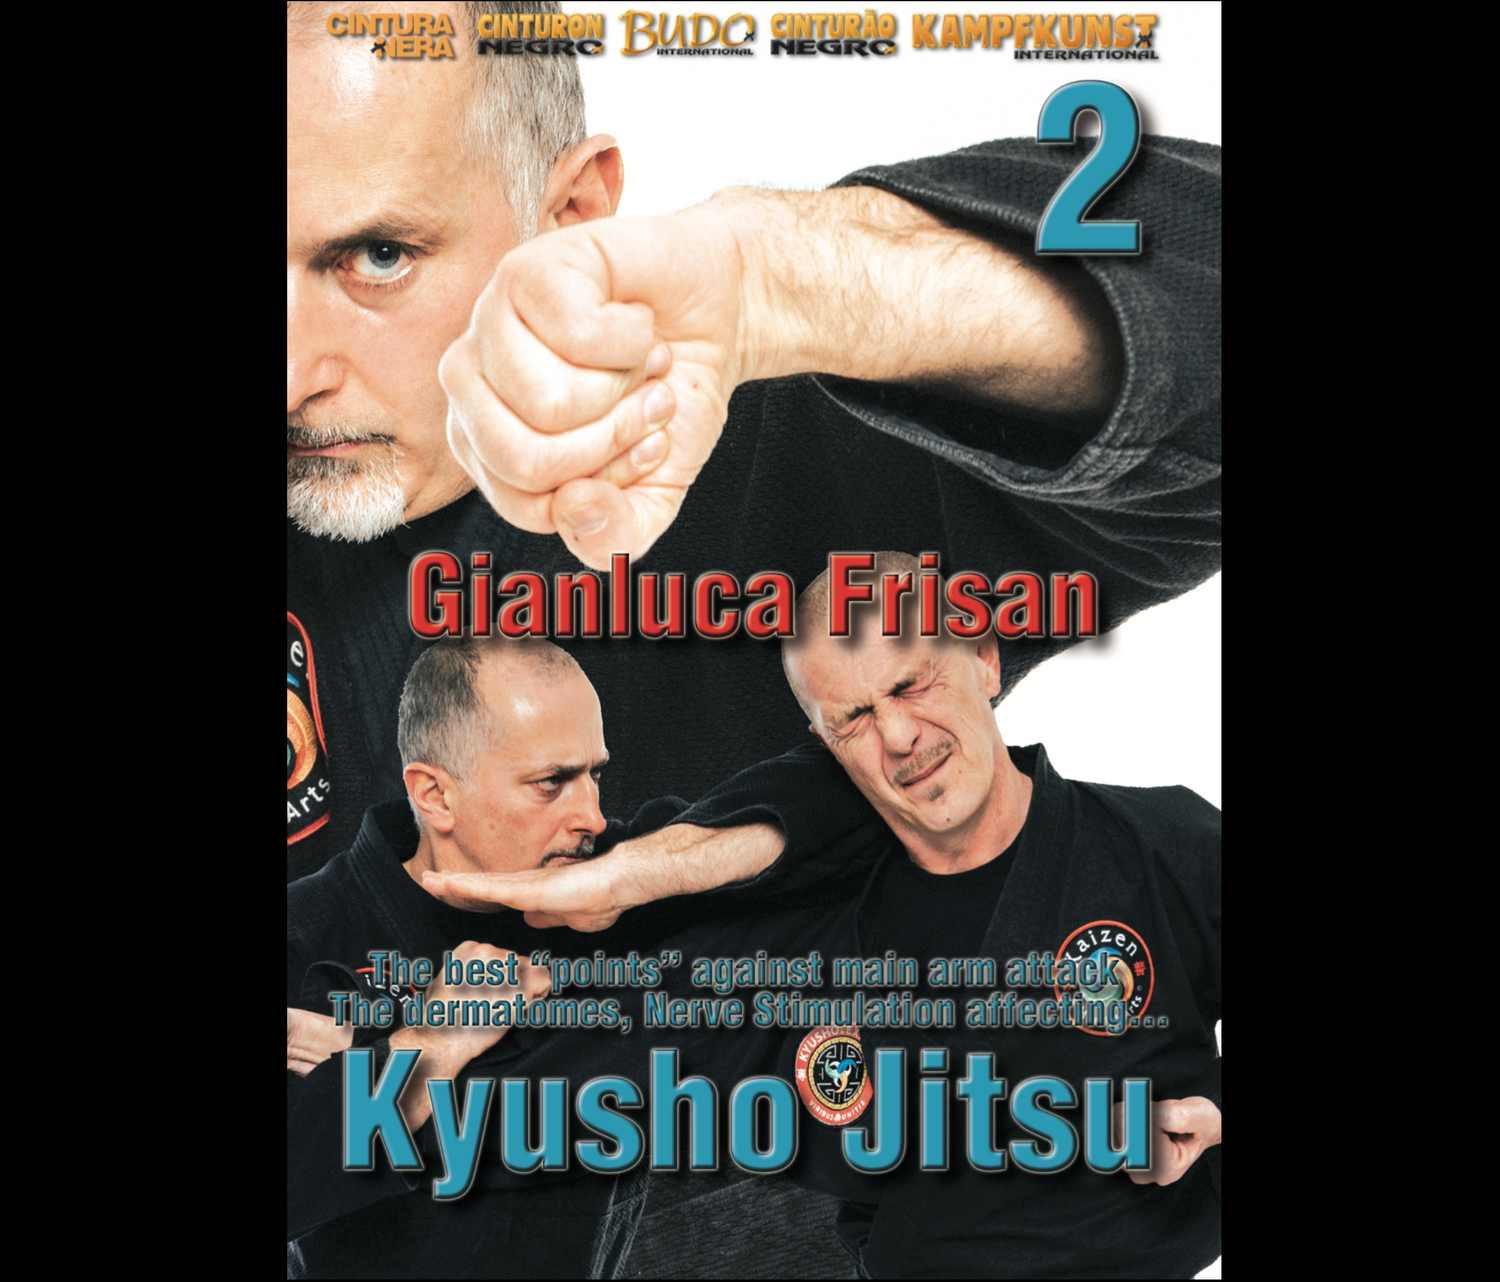 Kyusho Jitsu Nerve Stimulation 2 w Gianluca Frisan (On Demand)